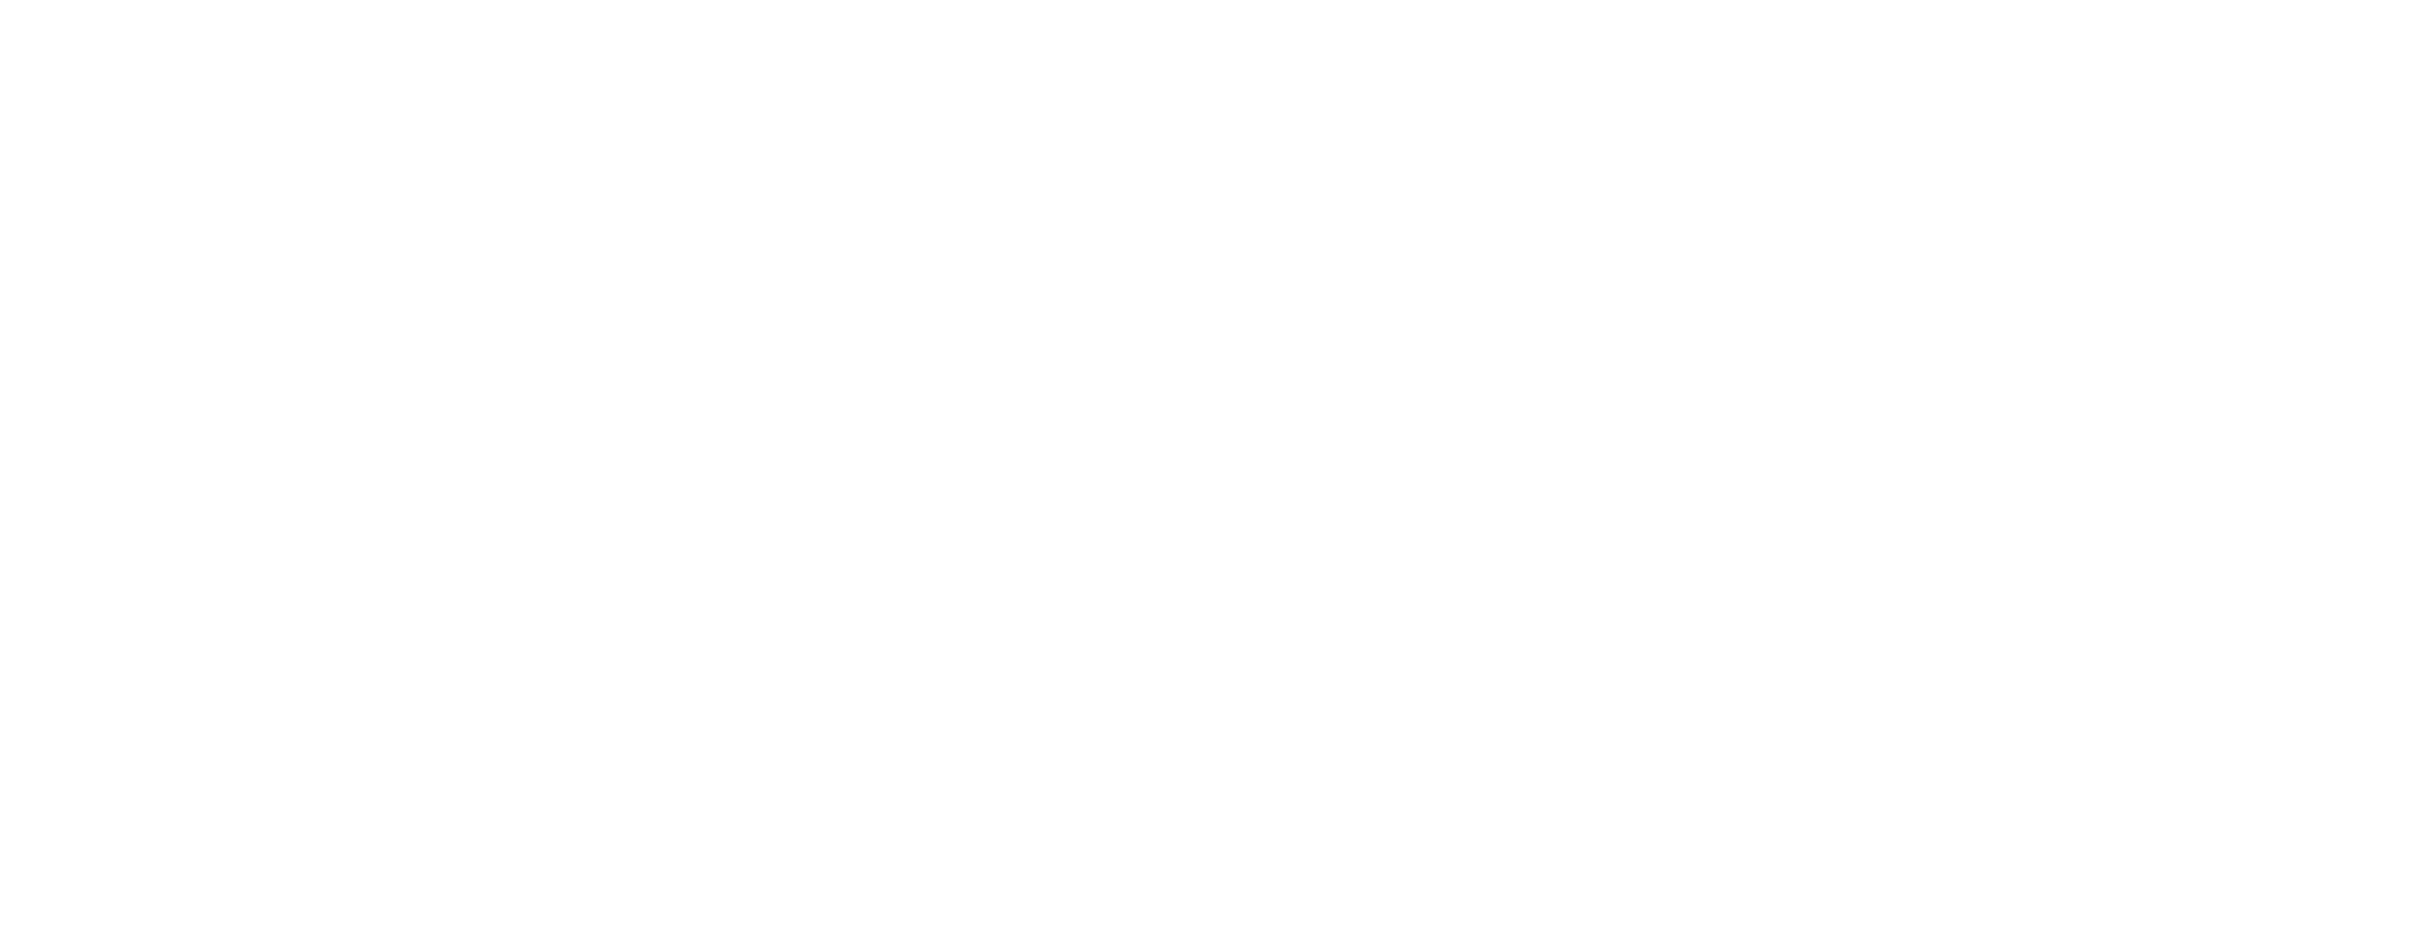 mindful employer